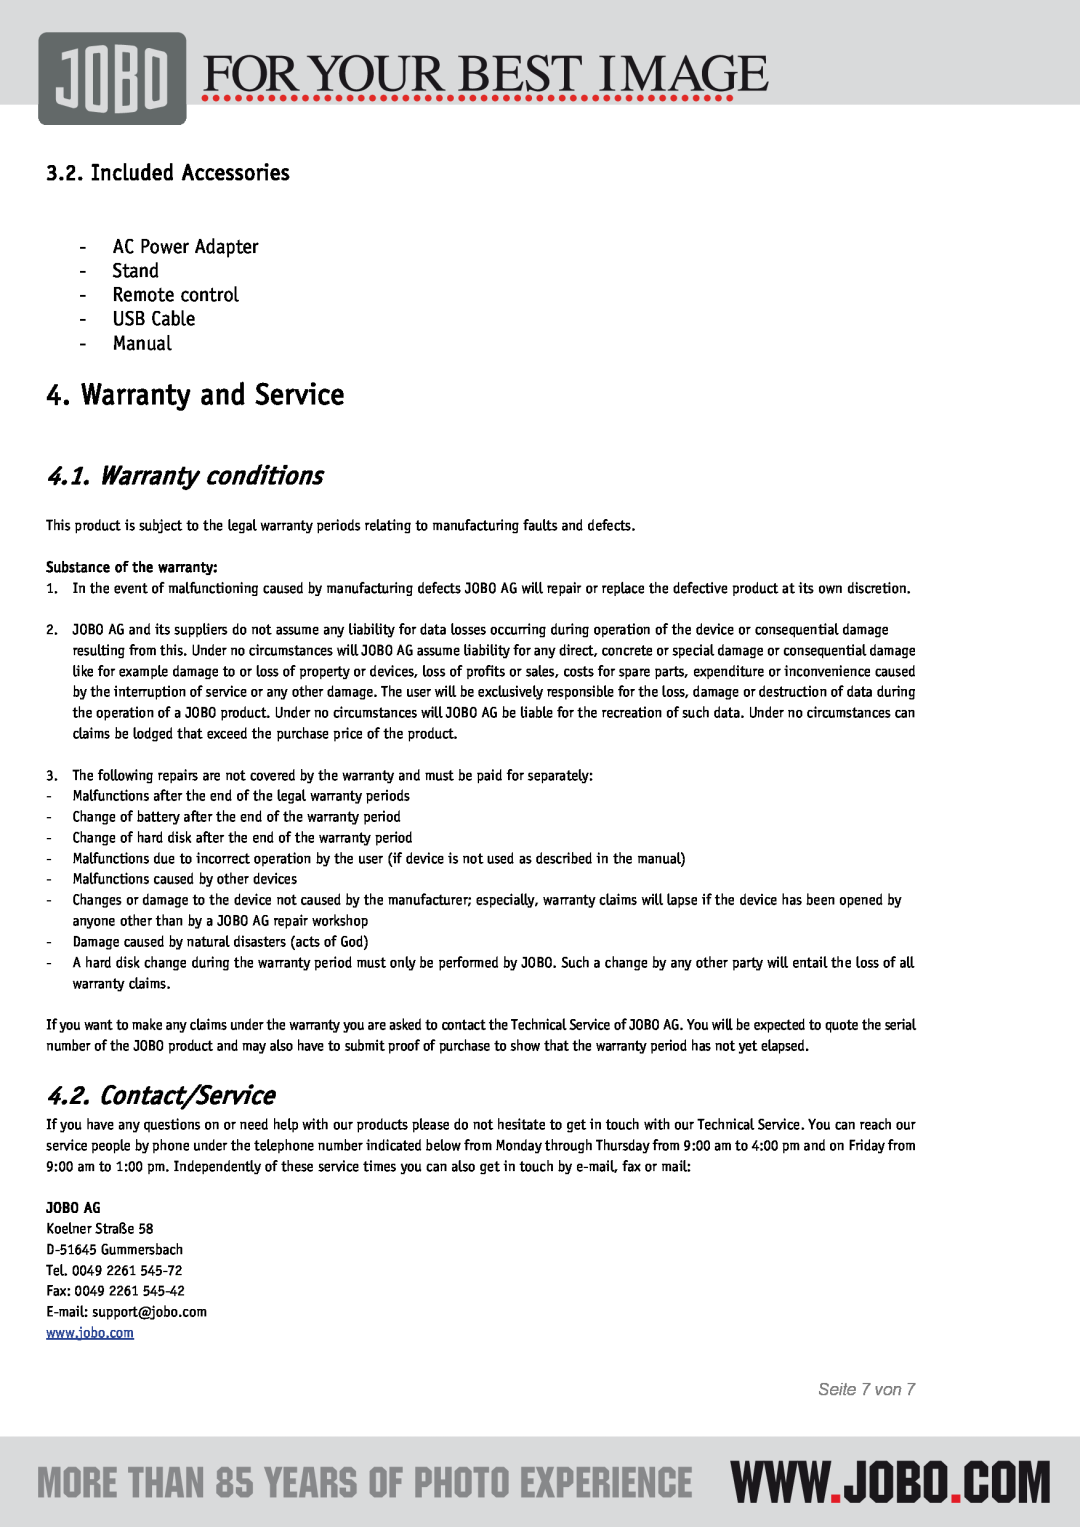 JOBO Mirage L Included Accessories, Warranty and Service, Warranty conditions, Contact/Service, Seite 7 von 